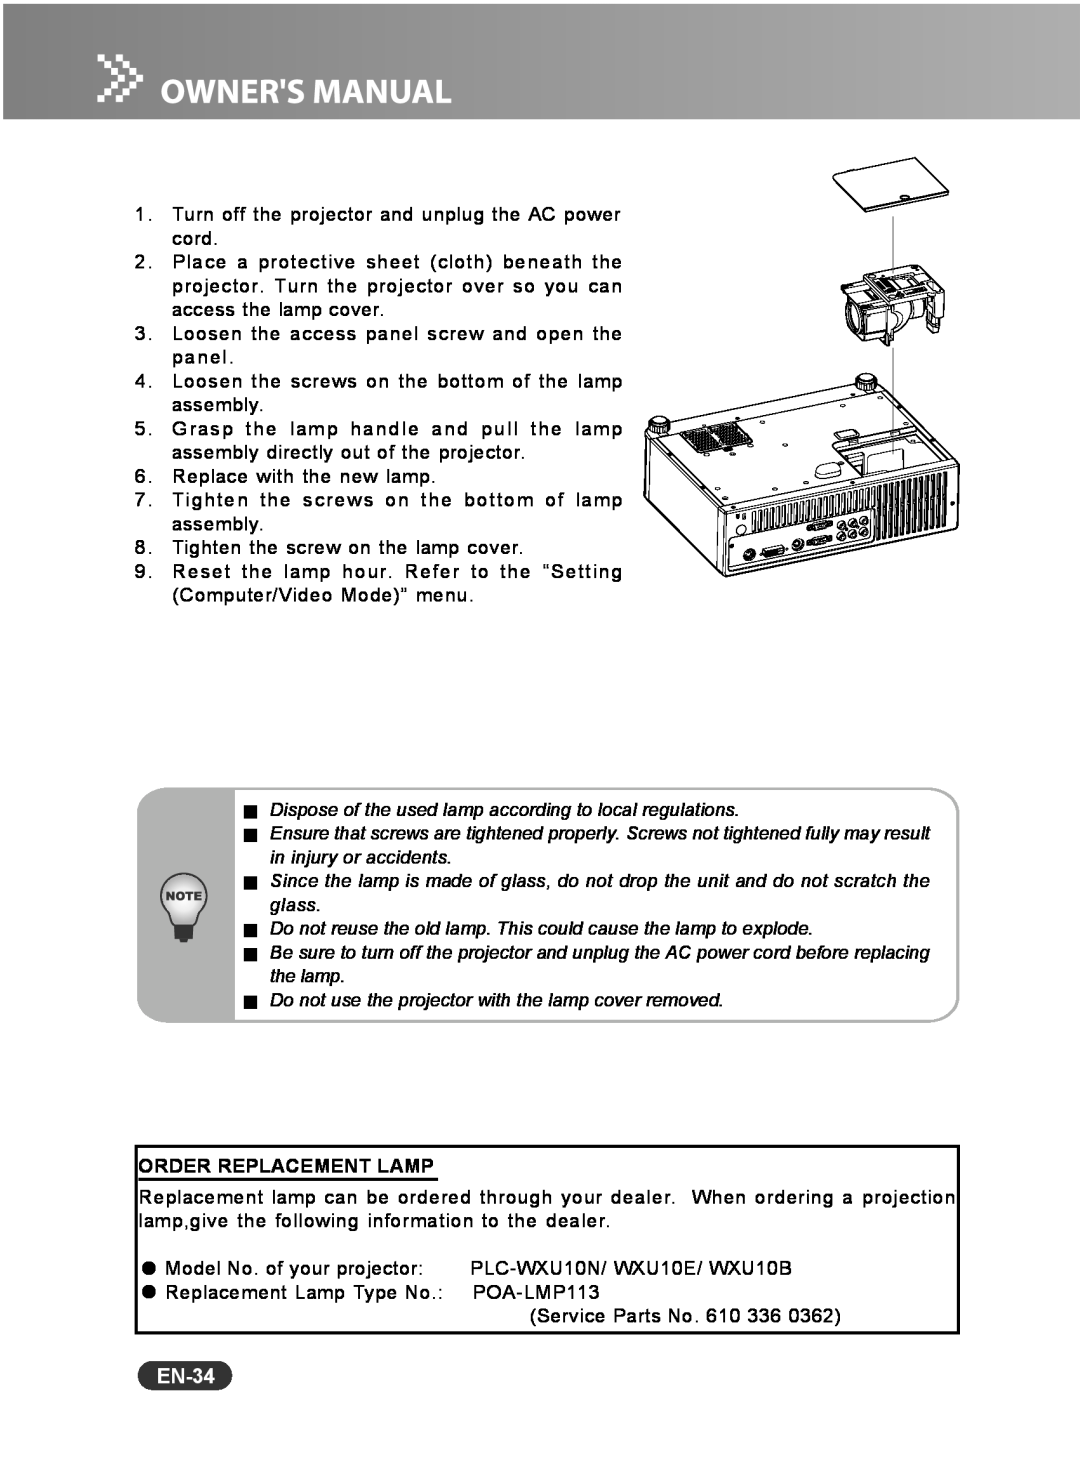 Sanyo PCL-WXU10B, PCL-WXU10N, PCL-WXU10E manual EN-34, Order Replacement Lamp 